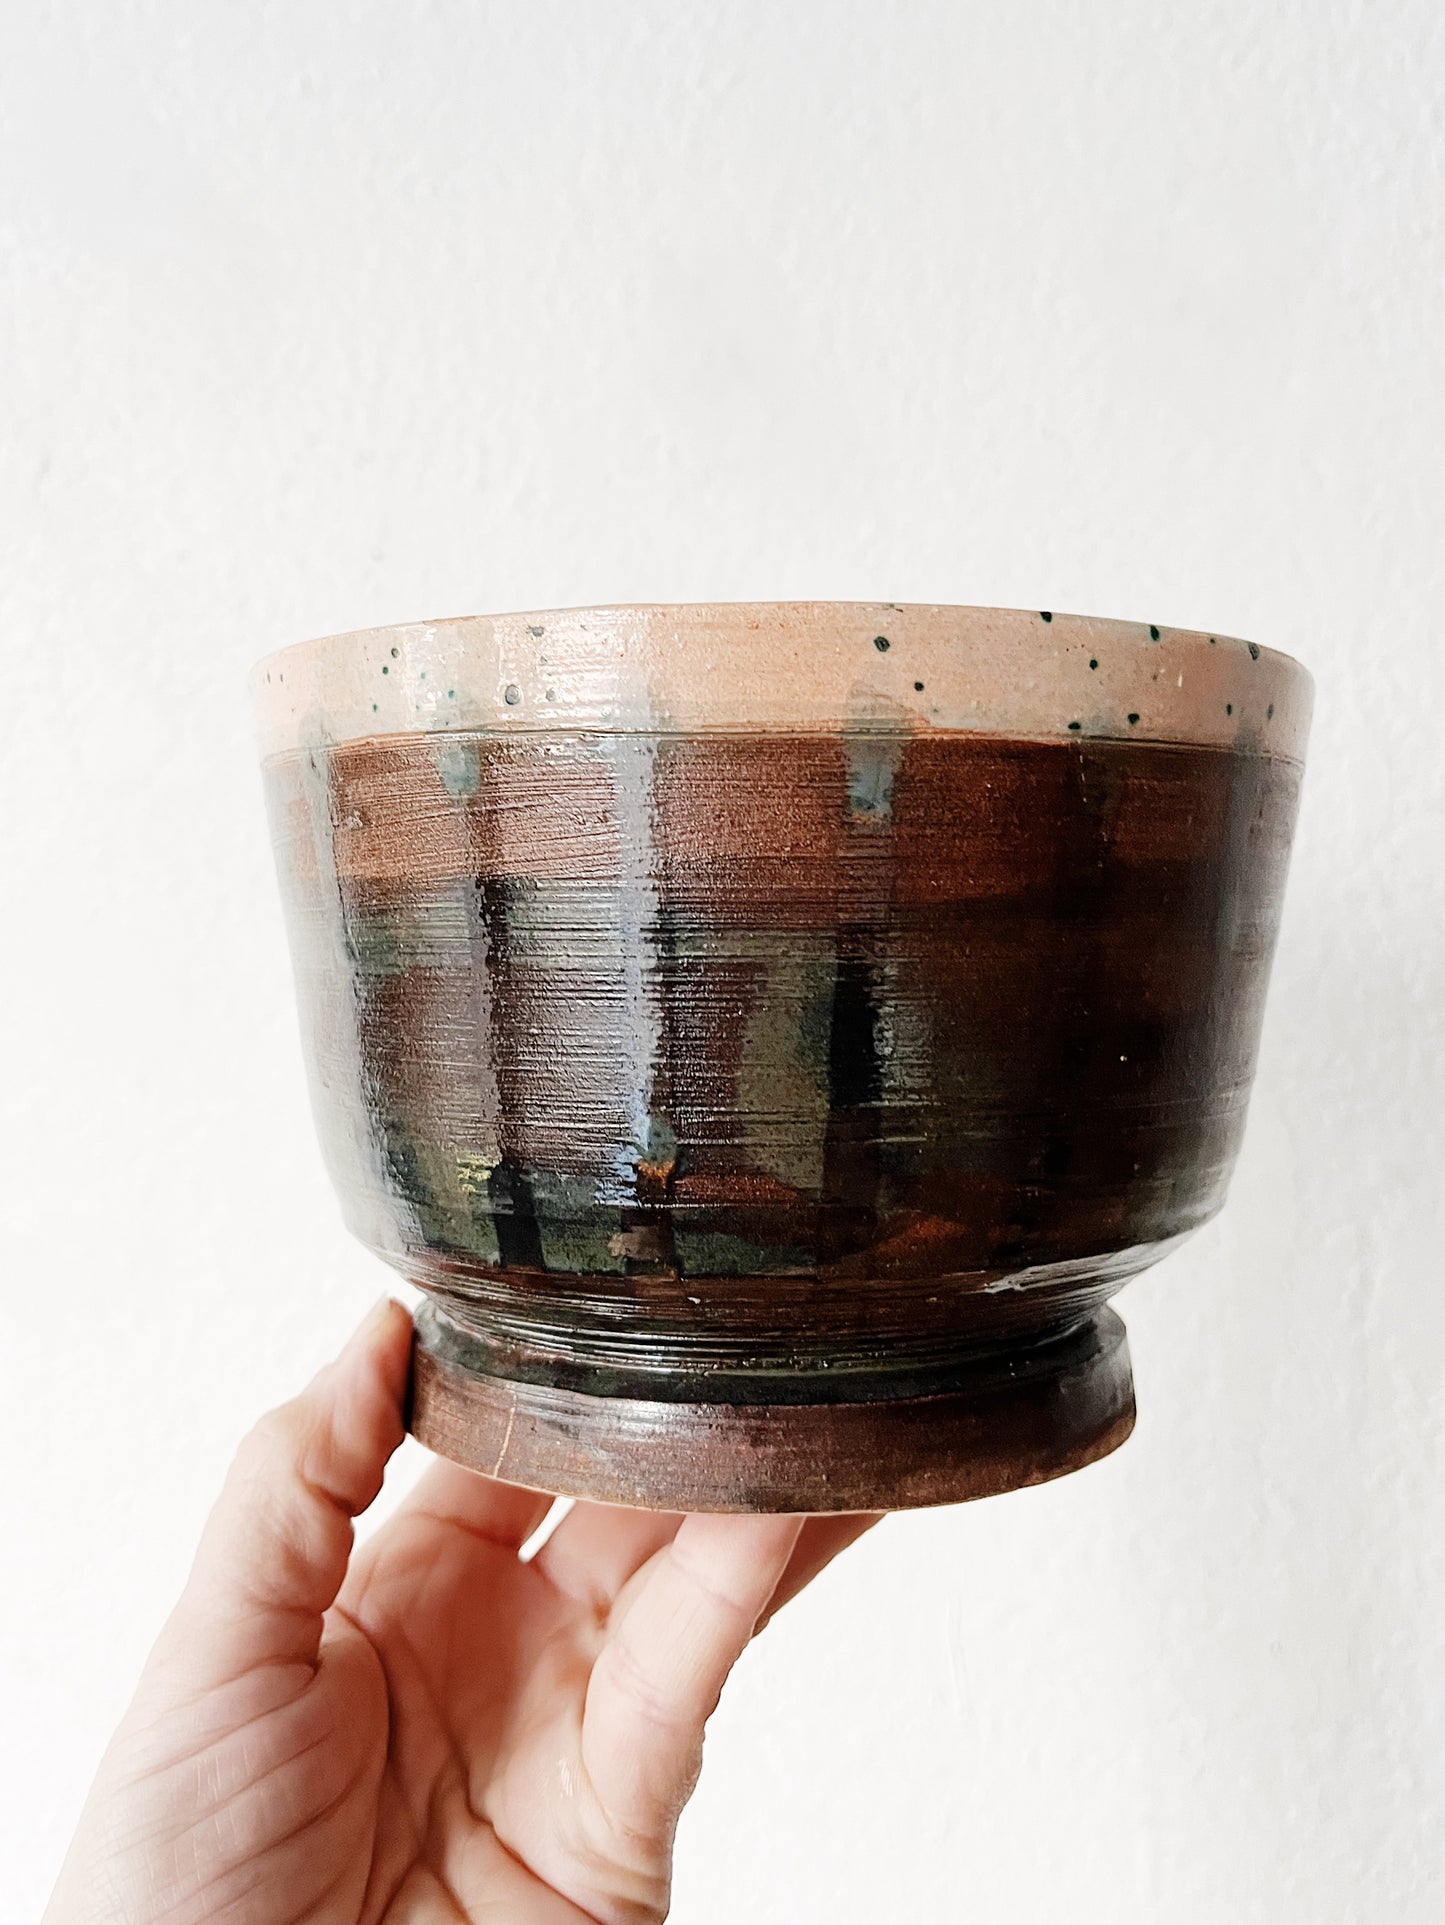 Vintage Studio Pottery Bowl